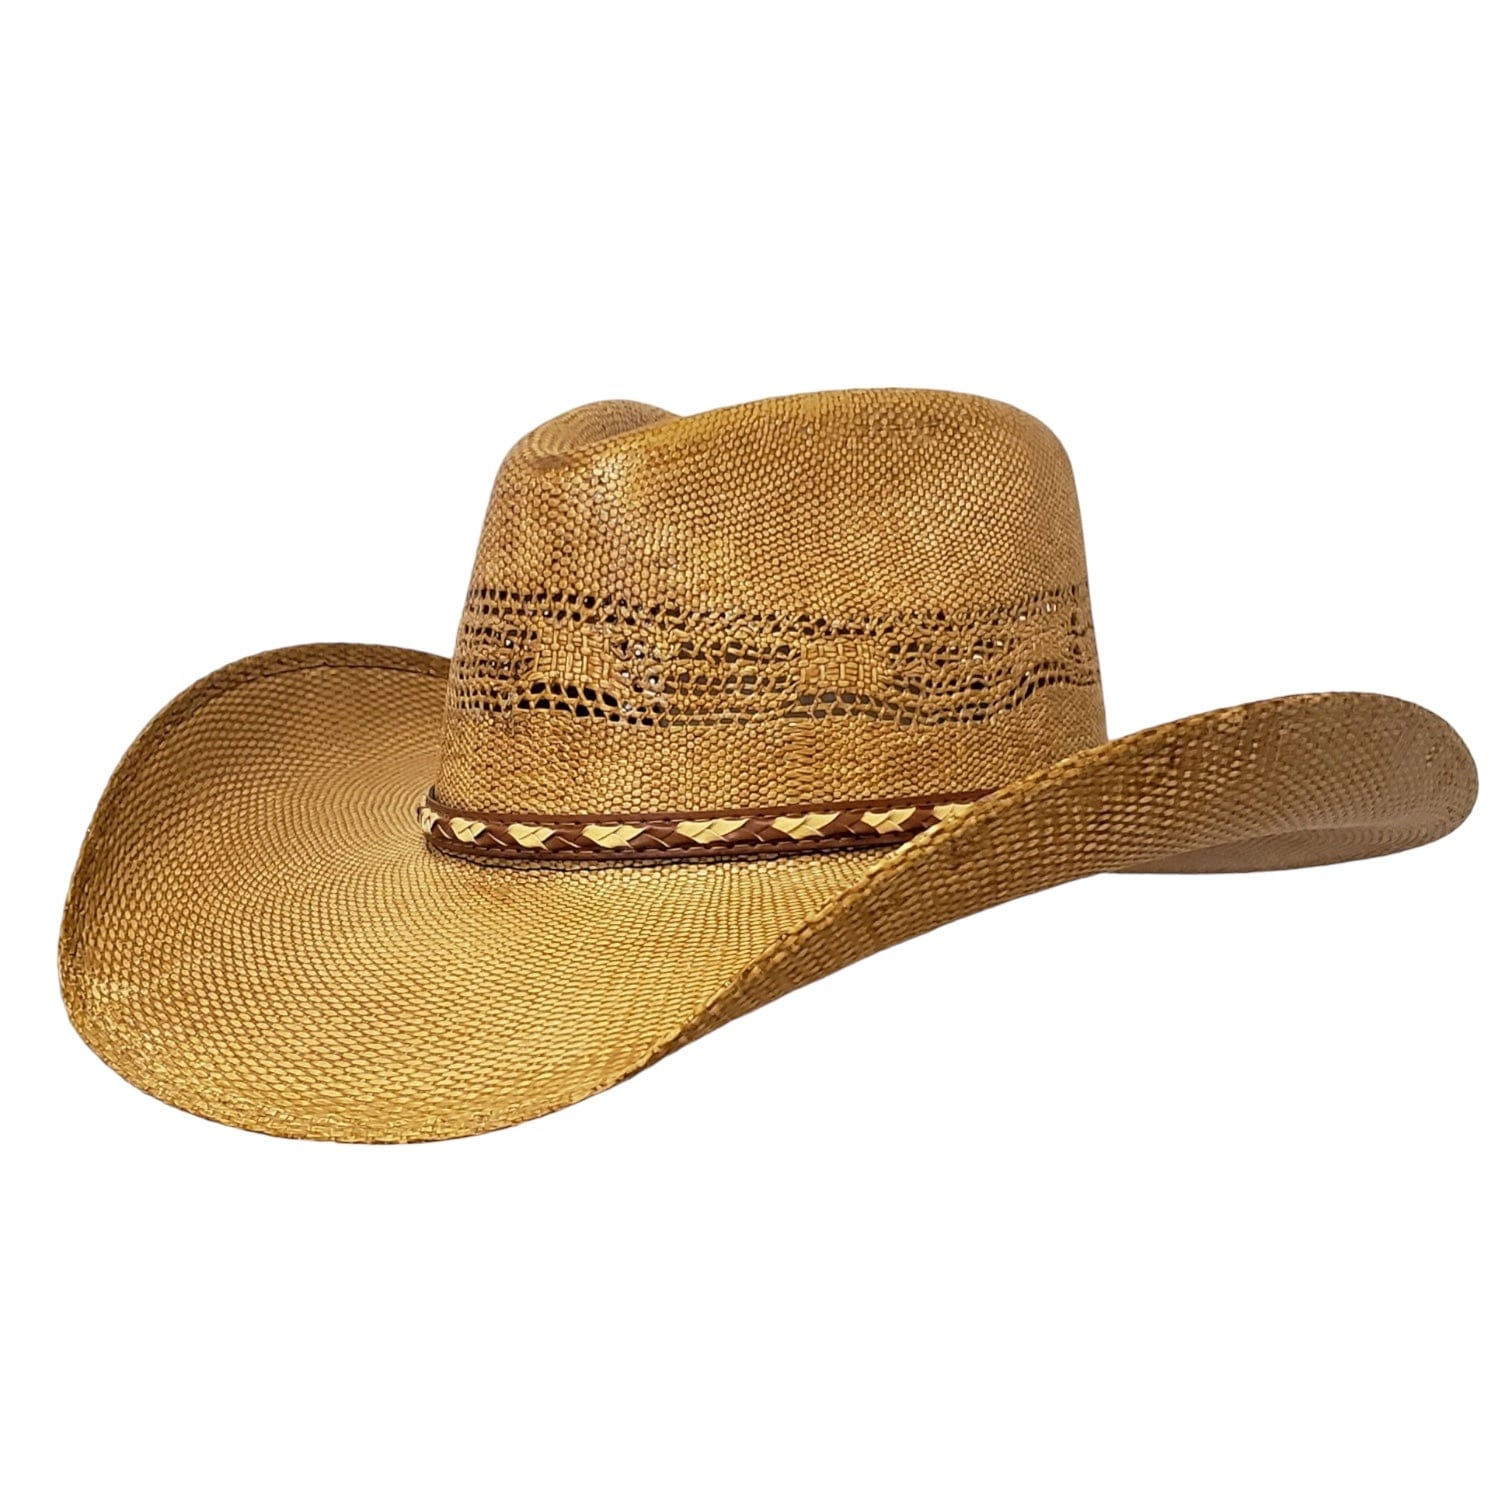 Gone Country Hats Men & Women's Hats Small  fits 6-7/8 to 7 Maverick Brown - Straw Bangora